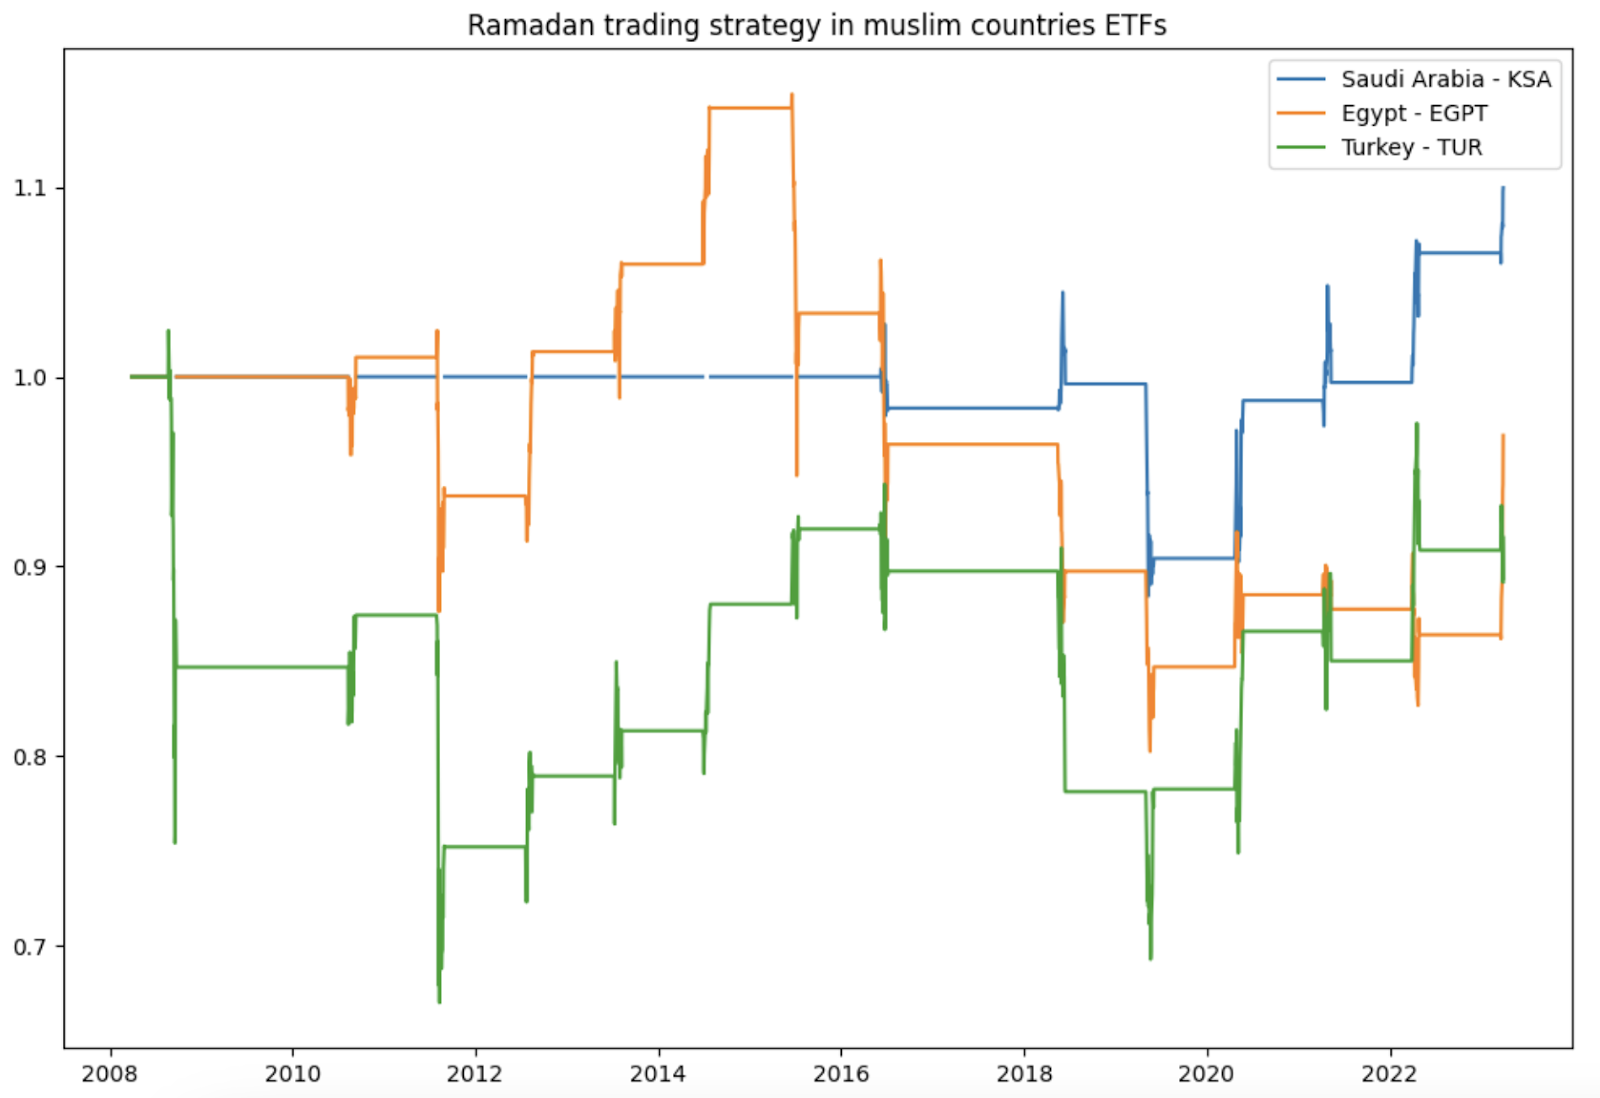 Ramadan trading strategy backtest